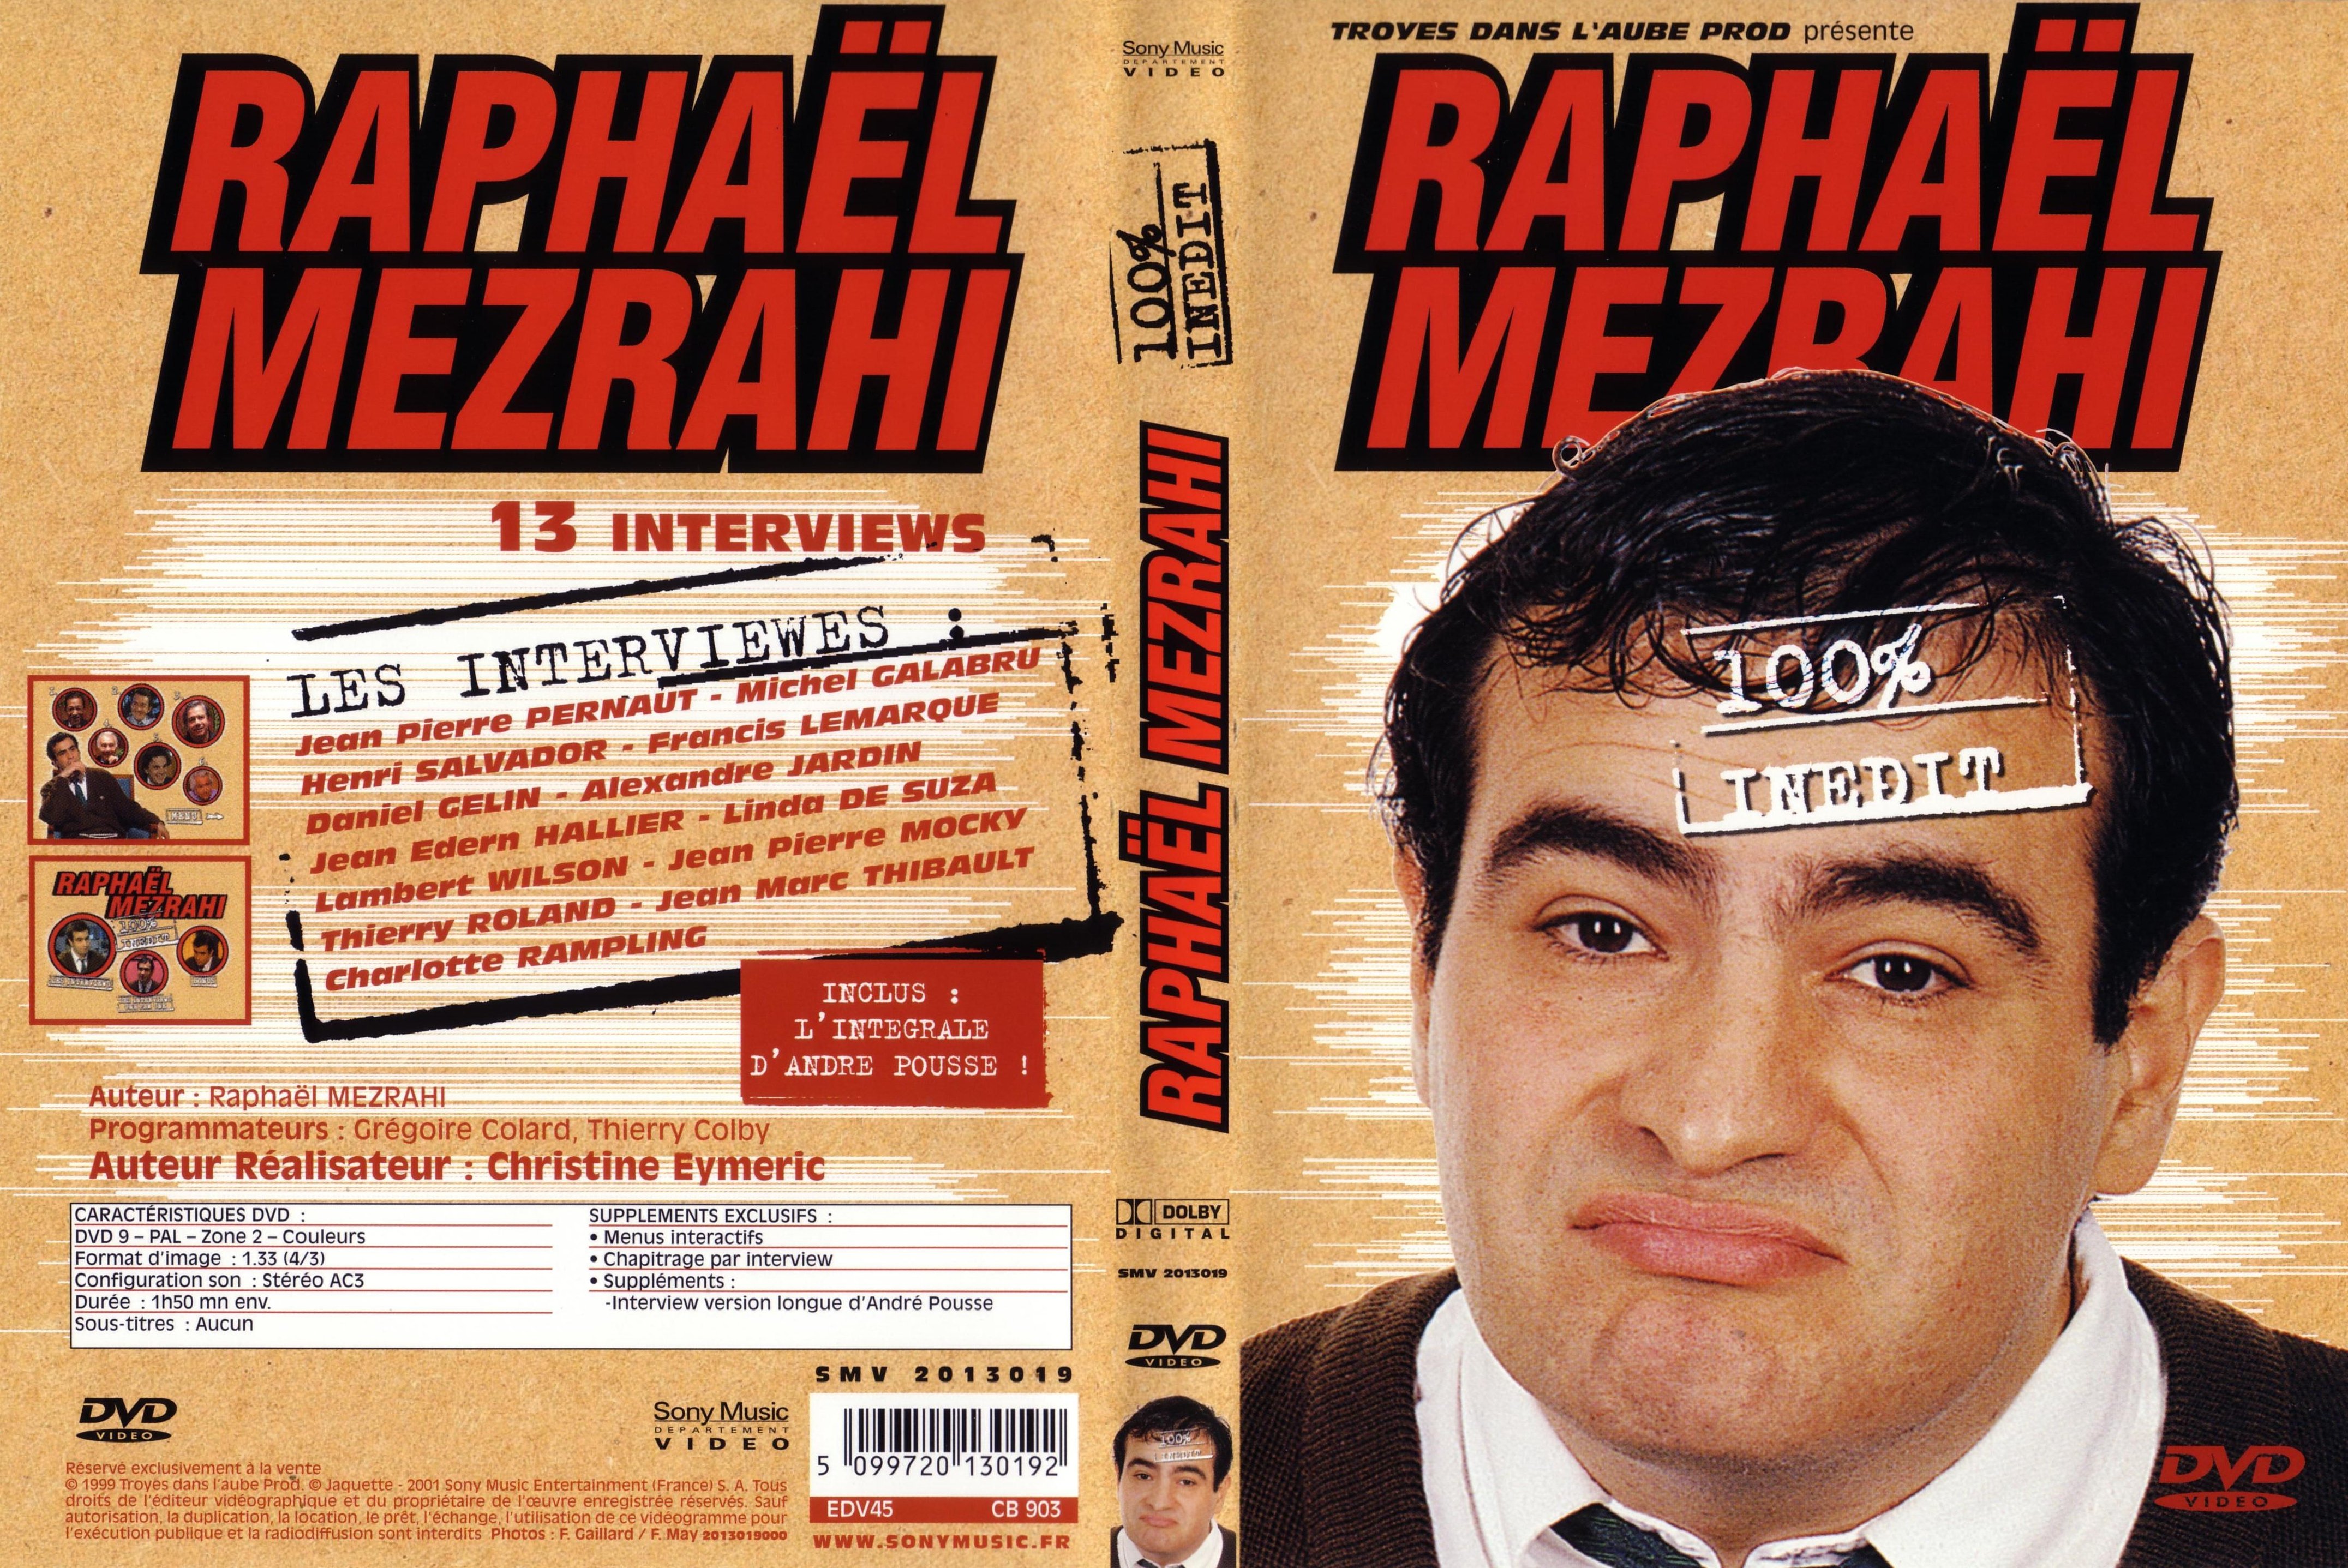 Jaquette DVD Raphael Mezrahi 100 inedit